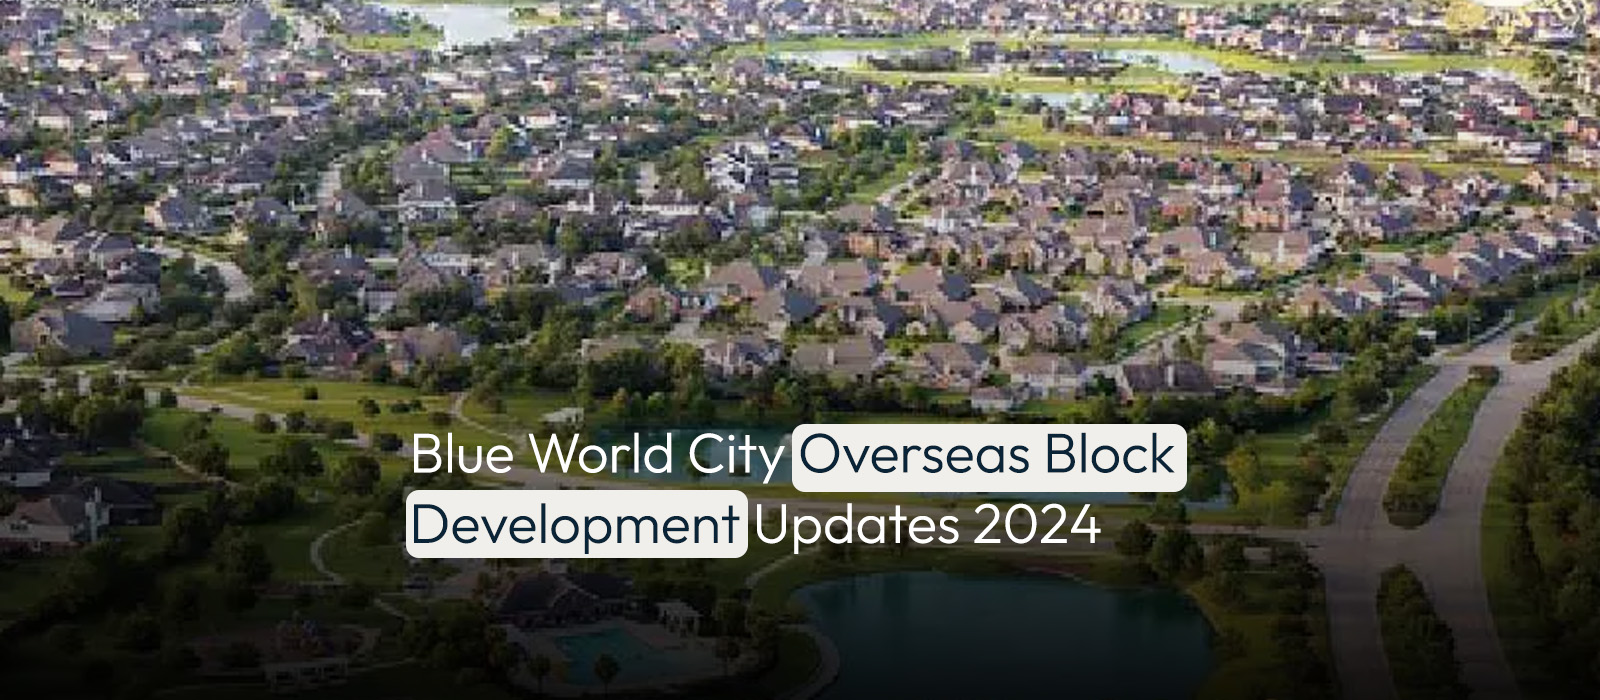 Blue World City Overseas Block Development Updates 2024